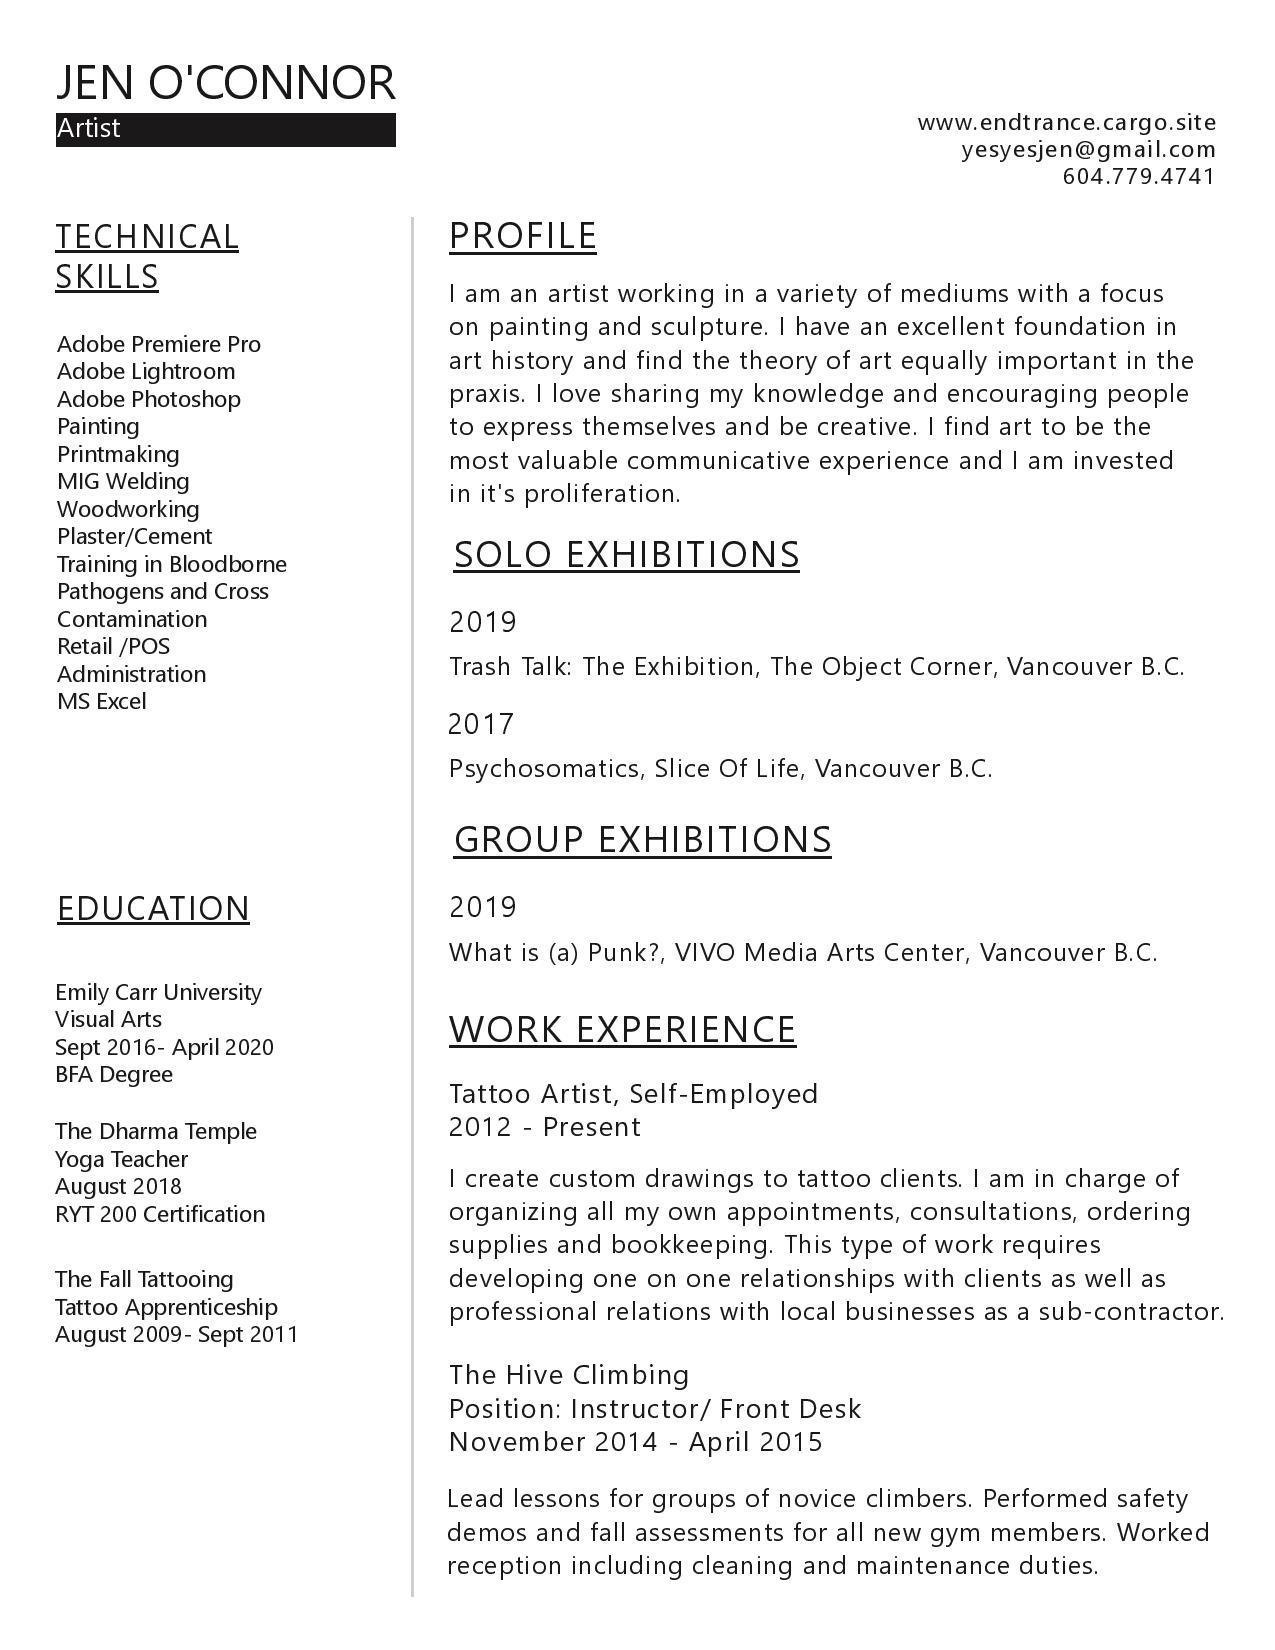 Destroy my resume [Graphic designer] [UK based] - Need advice! : r/Resume